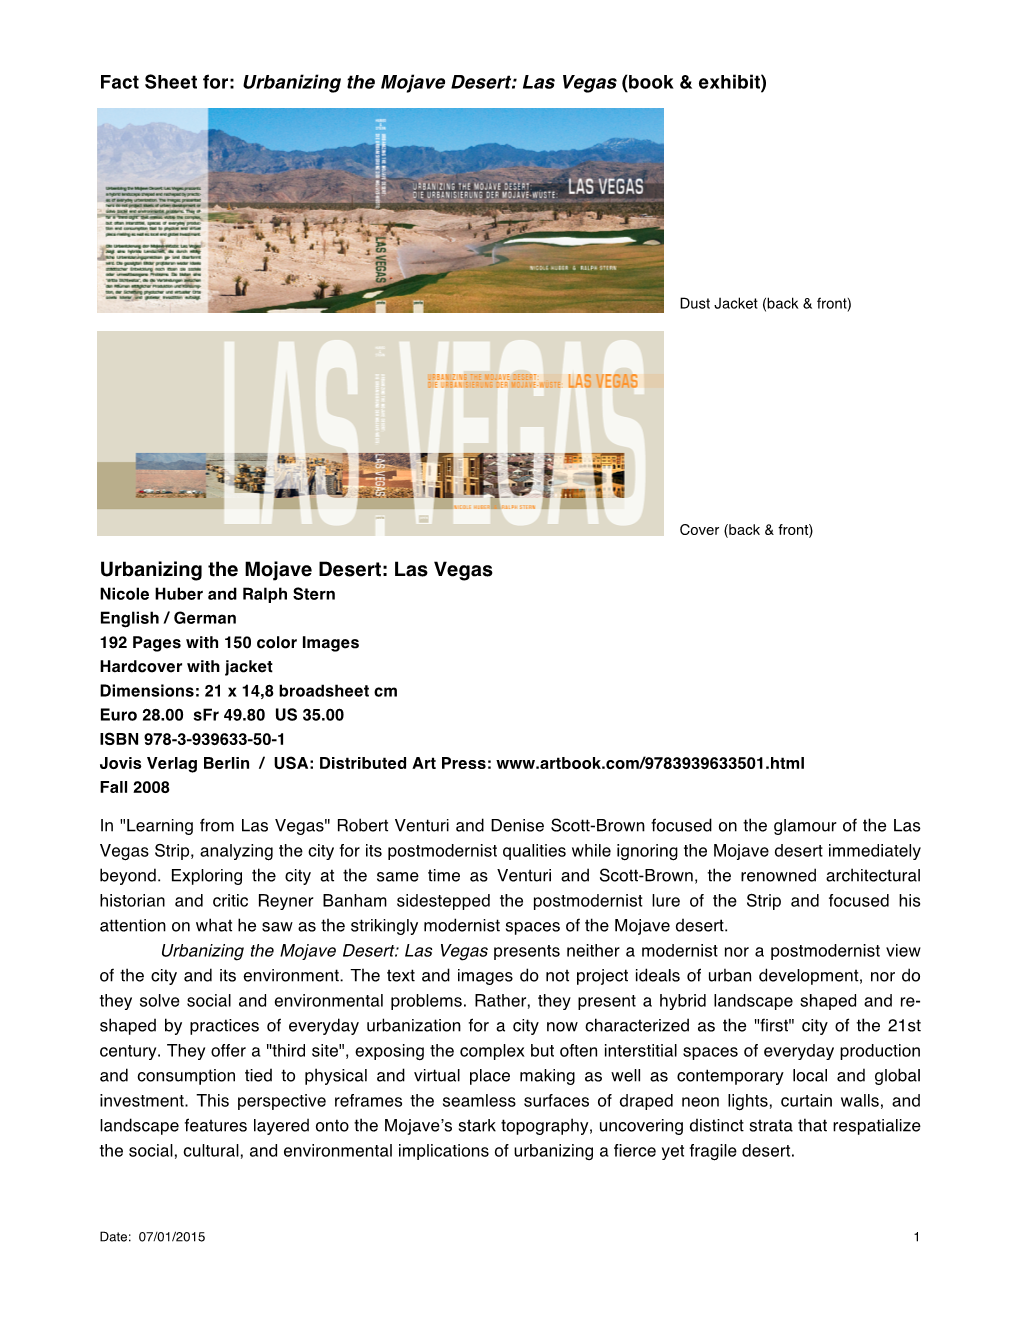 Fact Sheet For: Urbanizing the Mojave Desert: Las Vegas (Book & Exhibit)